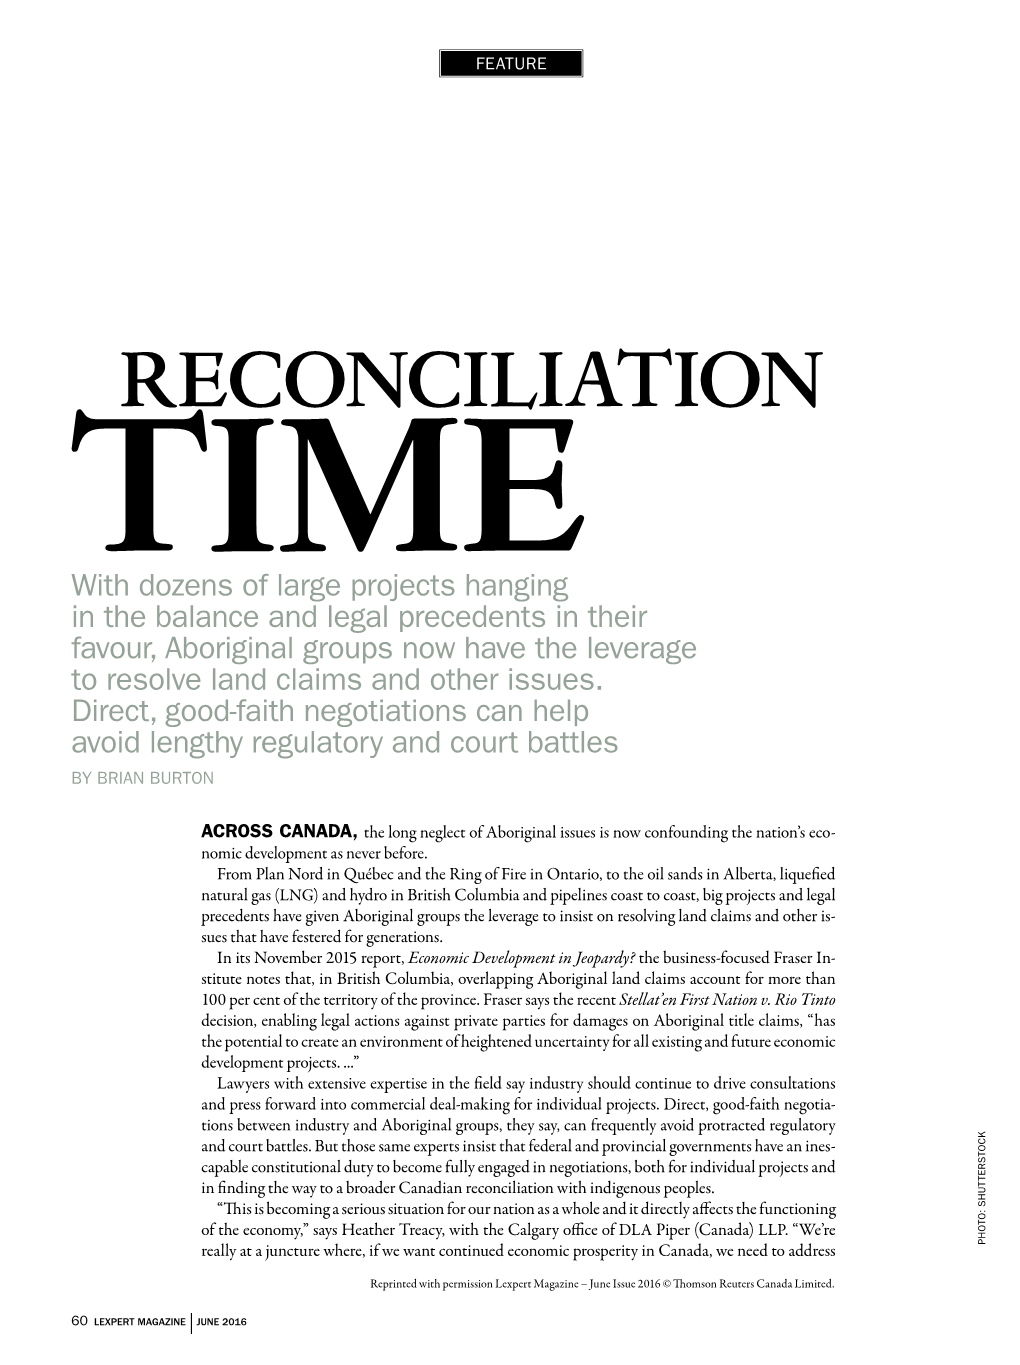 Reconciliation Time